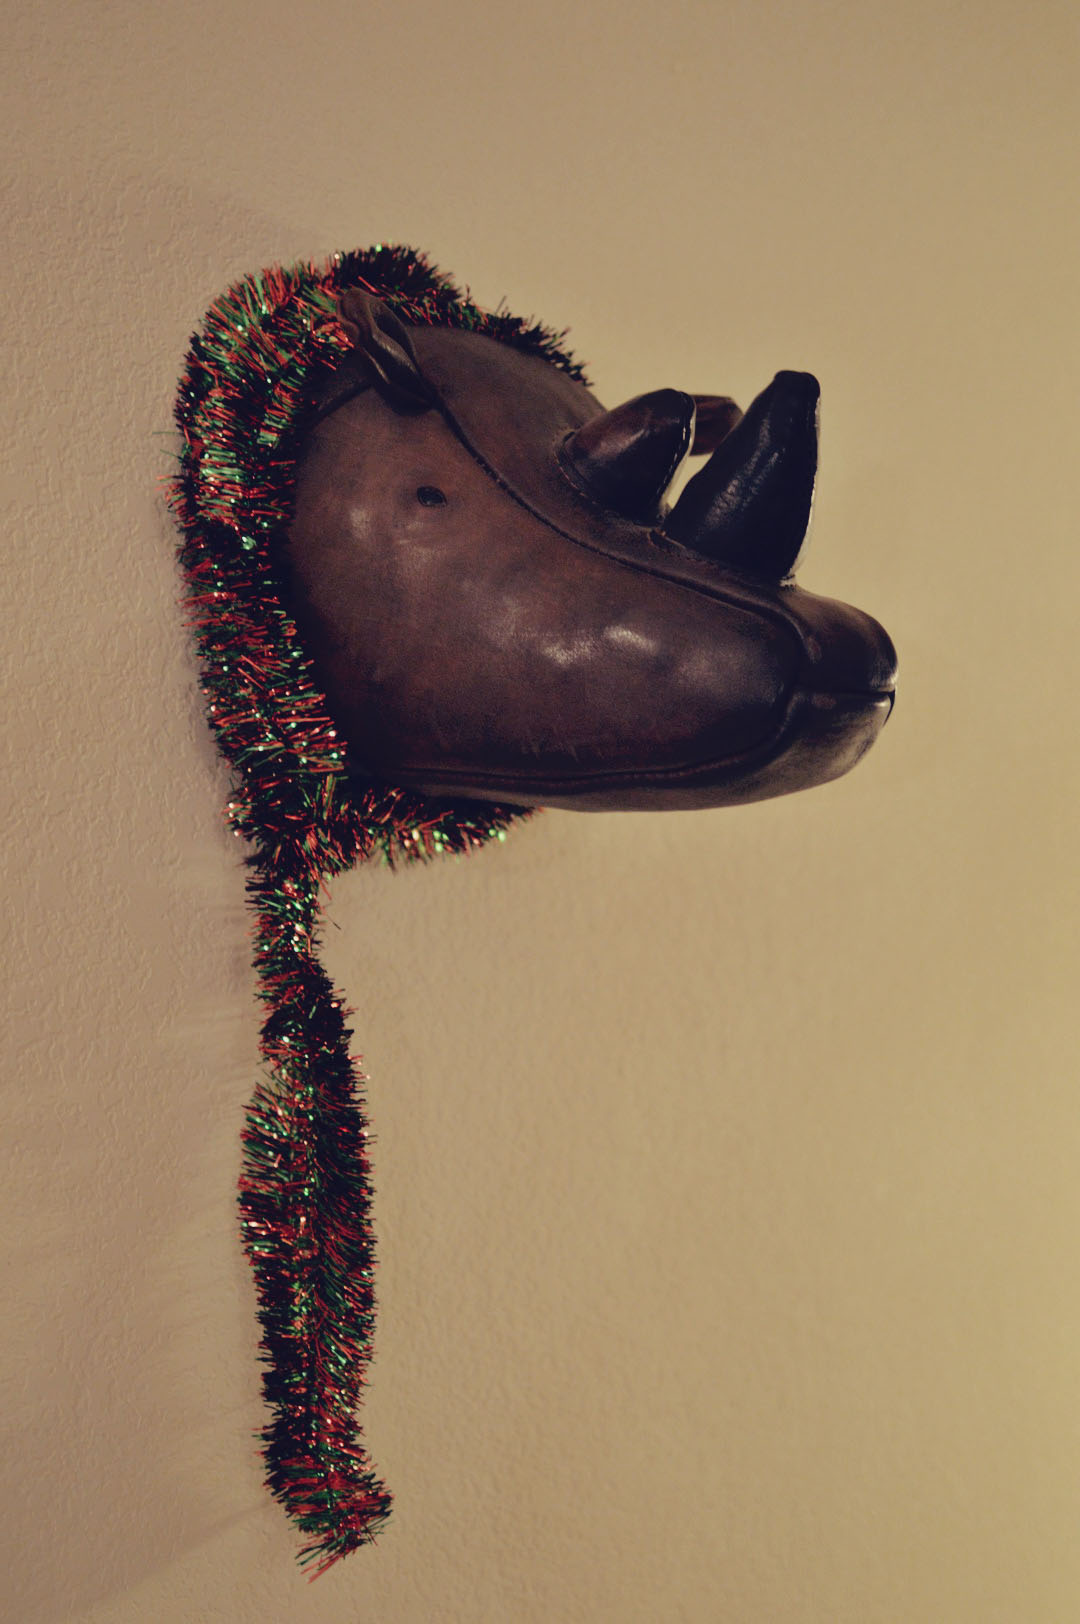 Christmas Decor and a festive Rhino